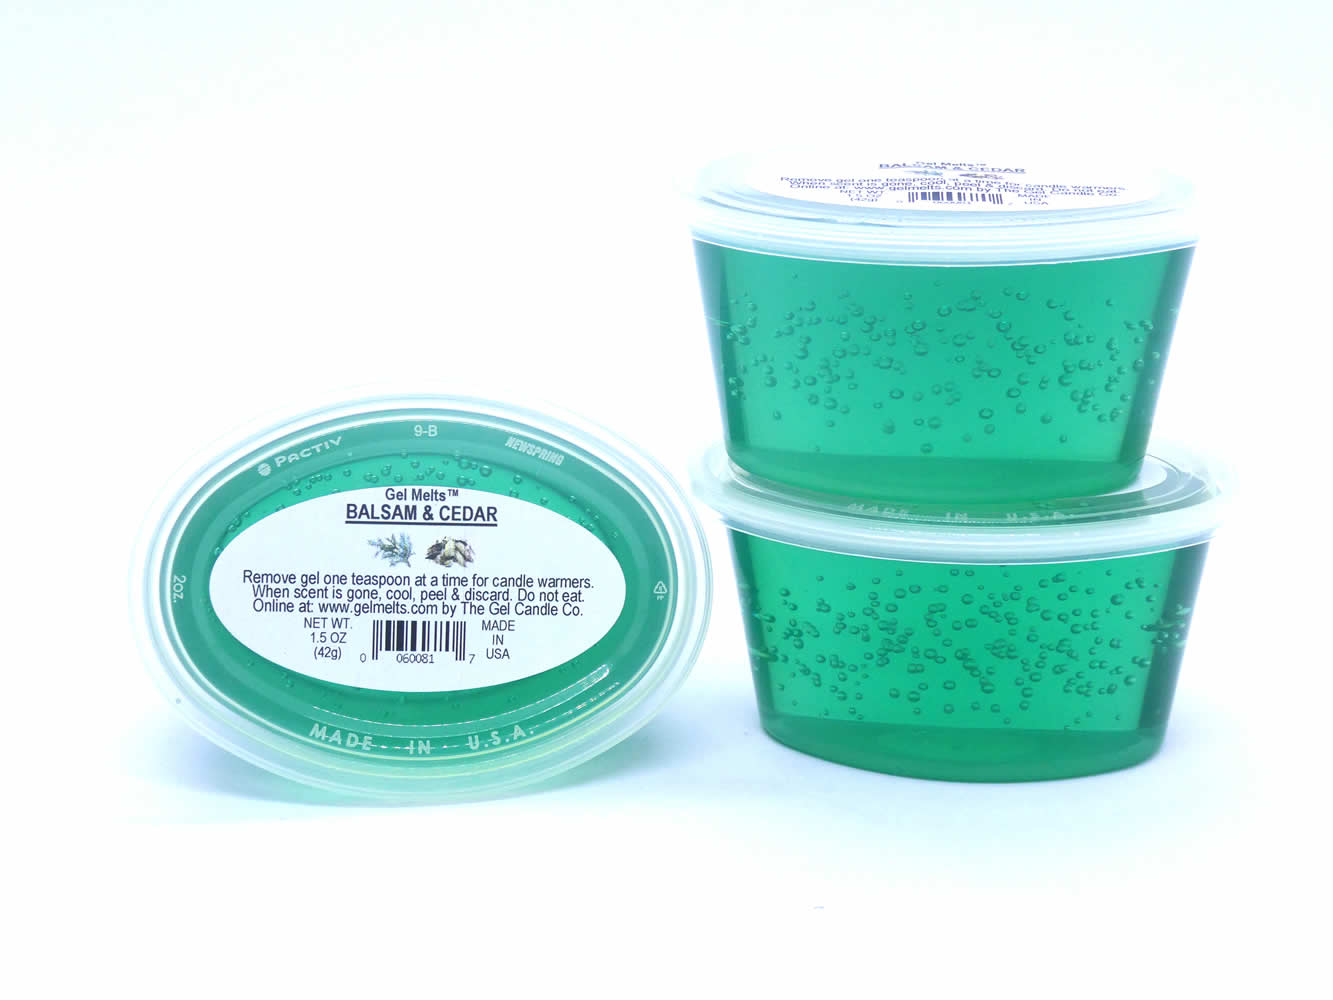 Balsam & Cedar scented Gel Melts™ for warmers - 3 pack